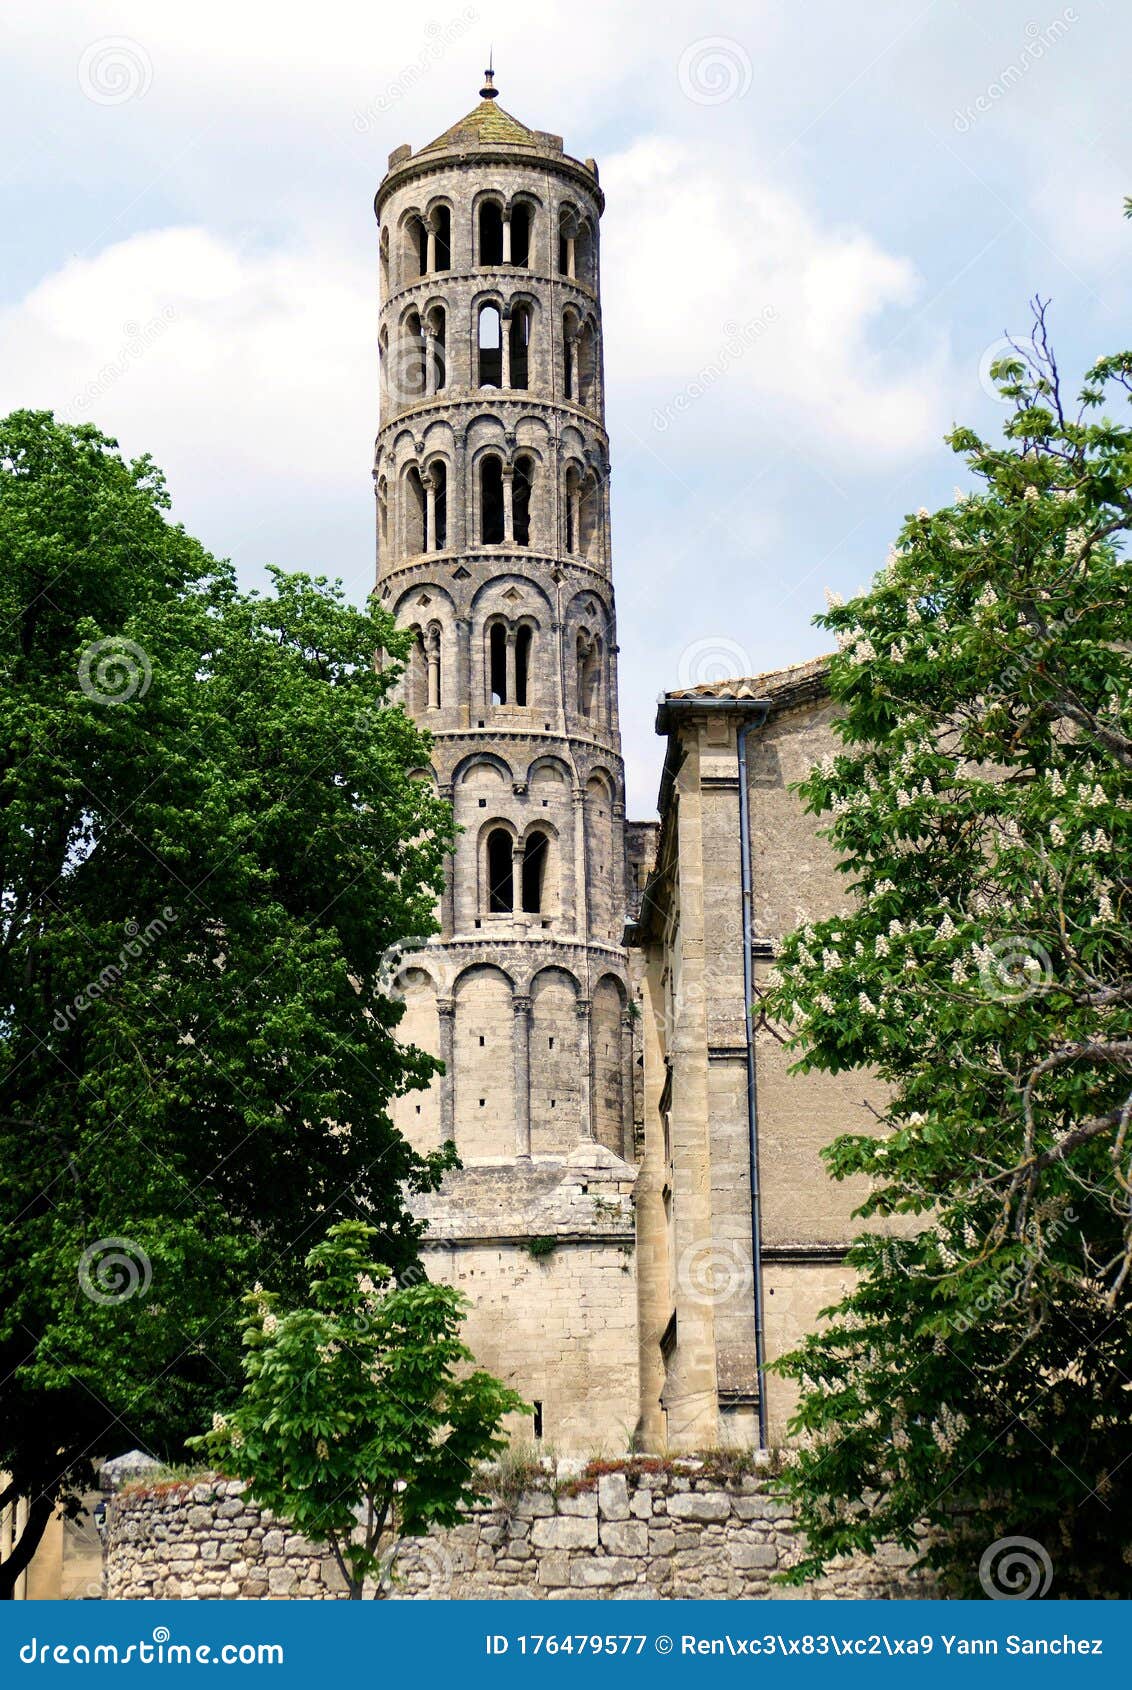 steeple of the old bishopric of uzÃÂ¨s